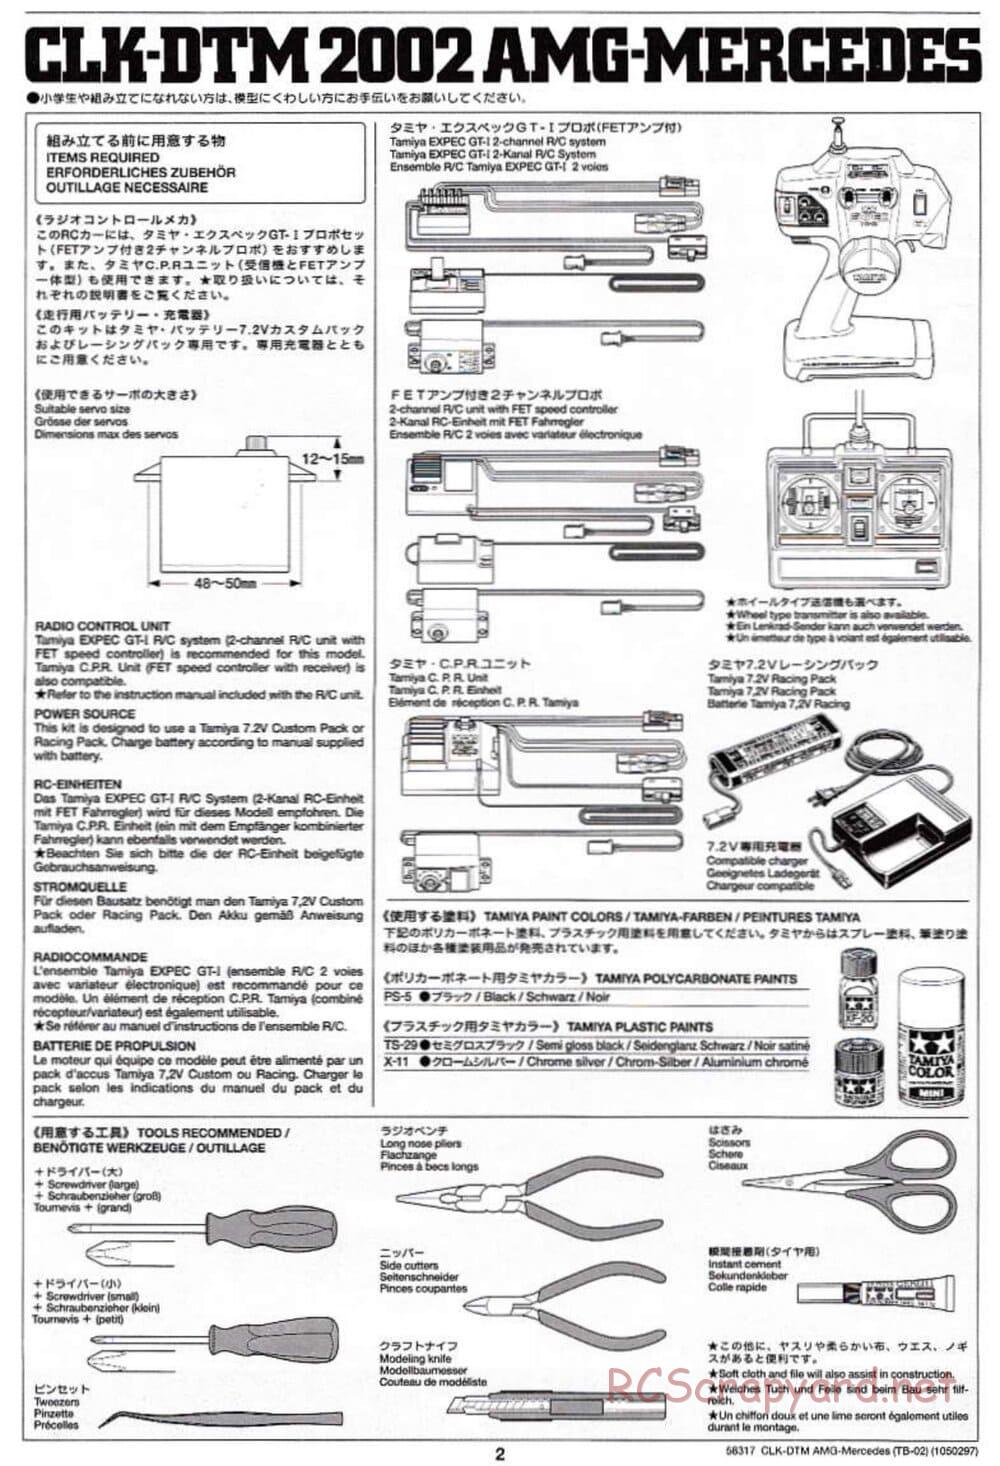 Tamiya - CLK DTM 2002 AMG Mercedes - TB-02 Chassis - Manual - Page 2